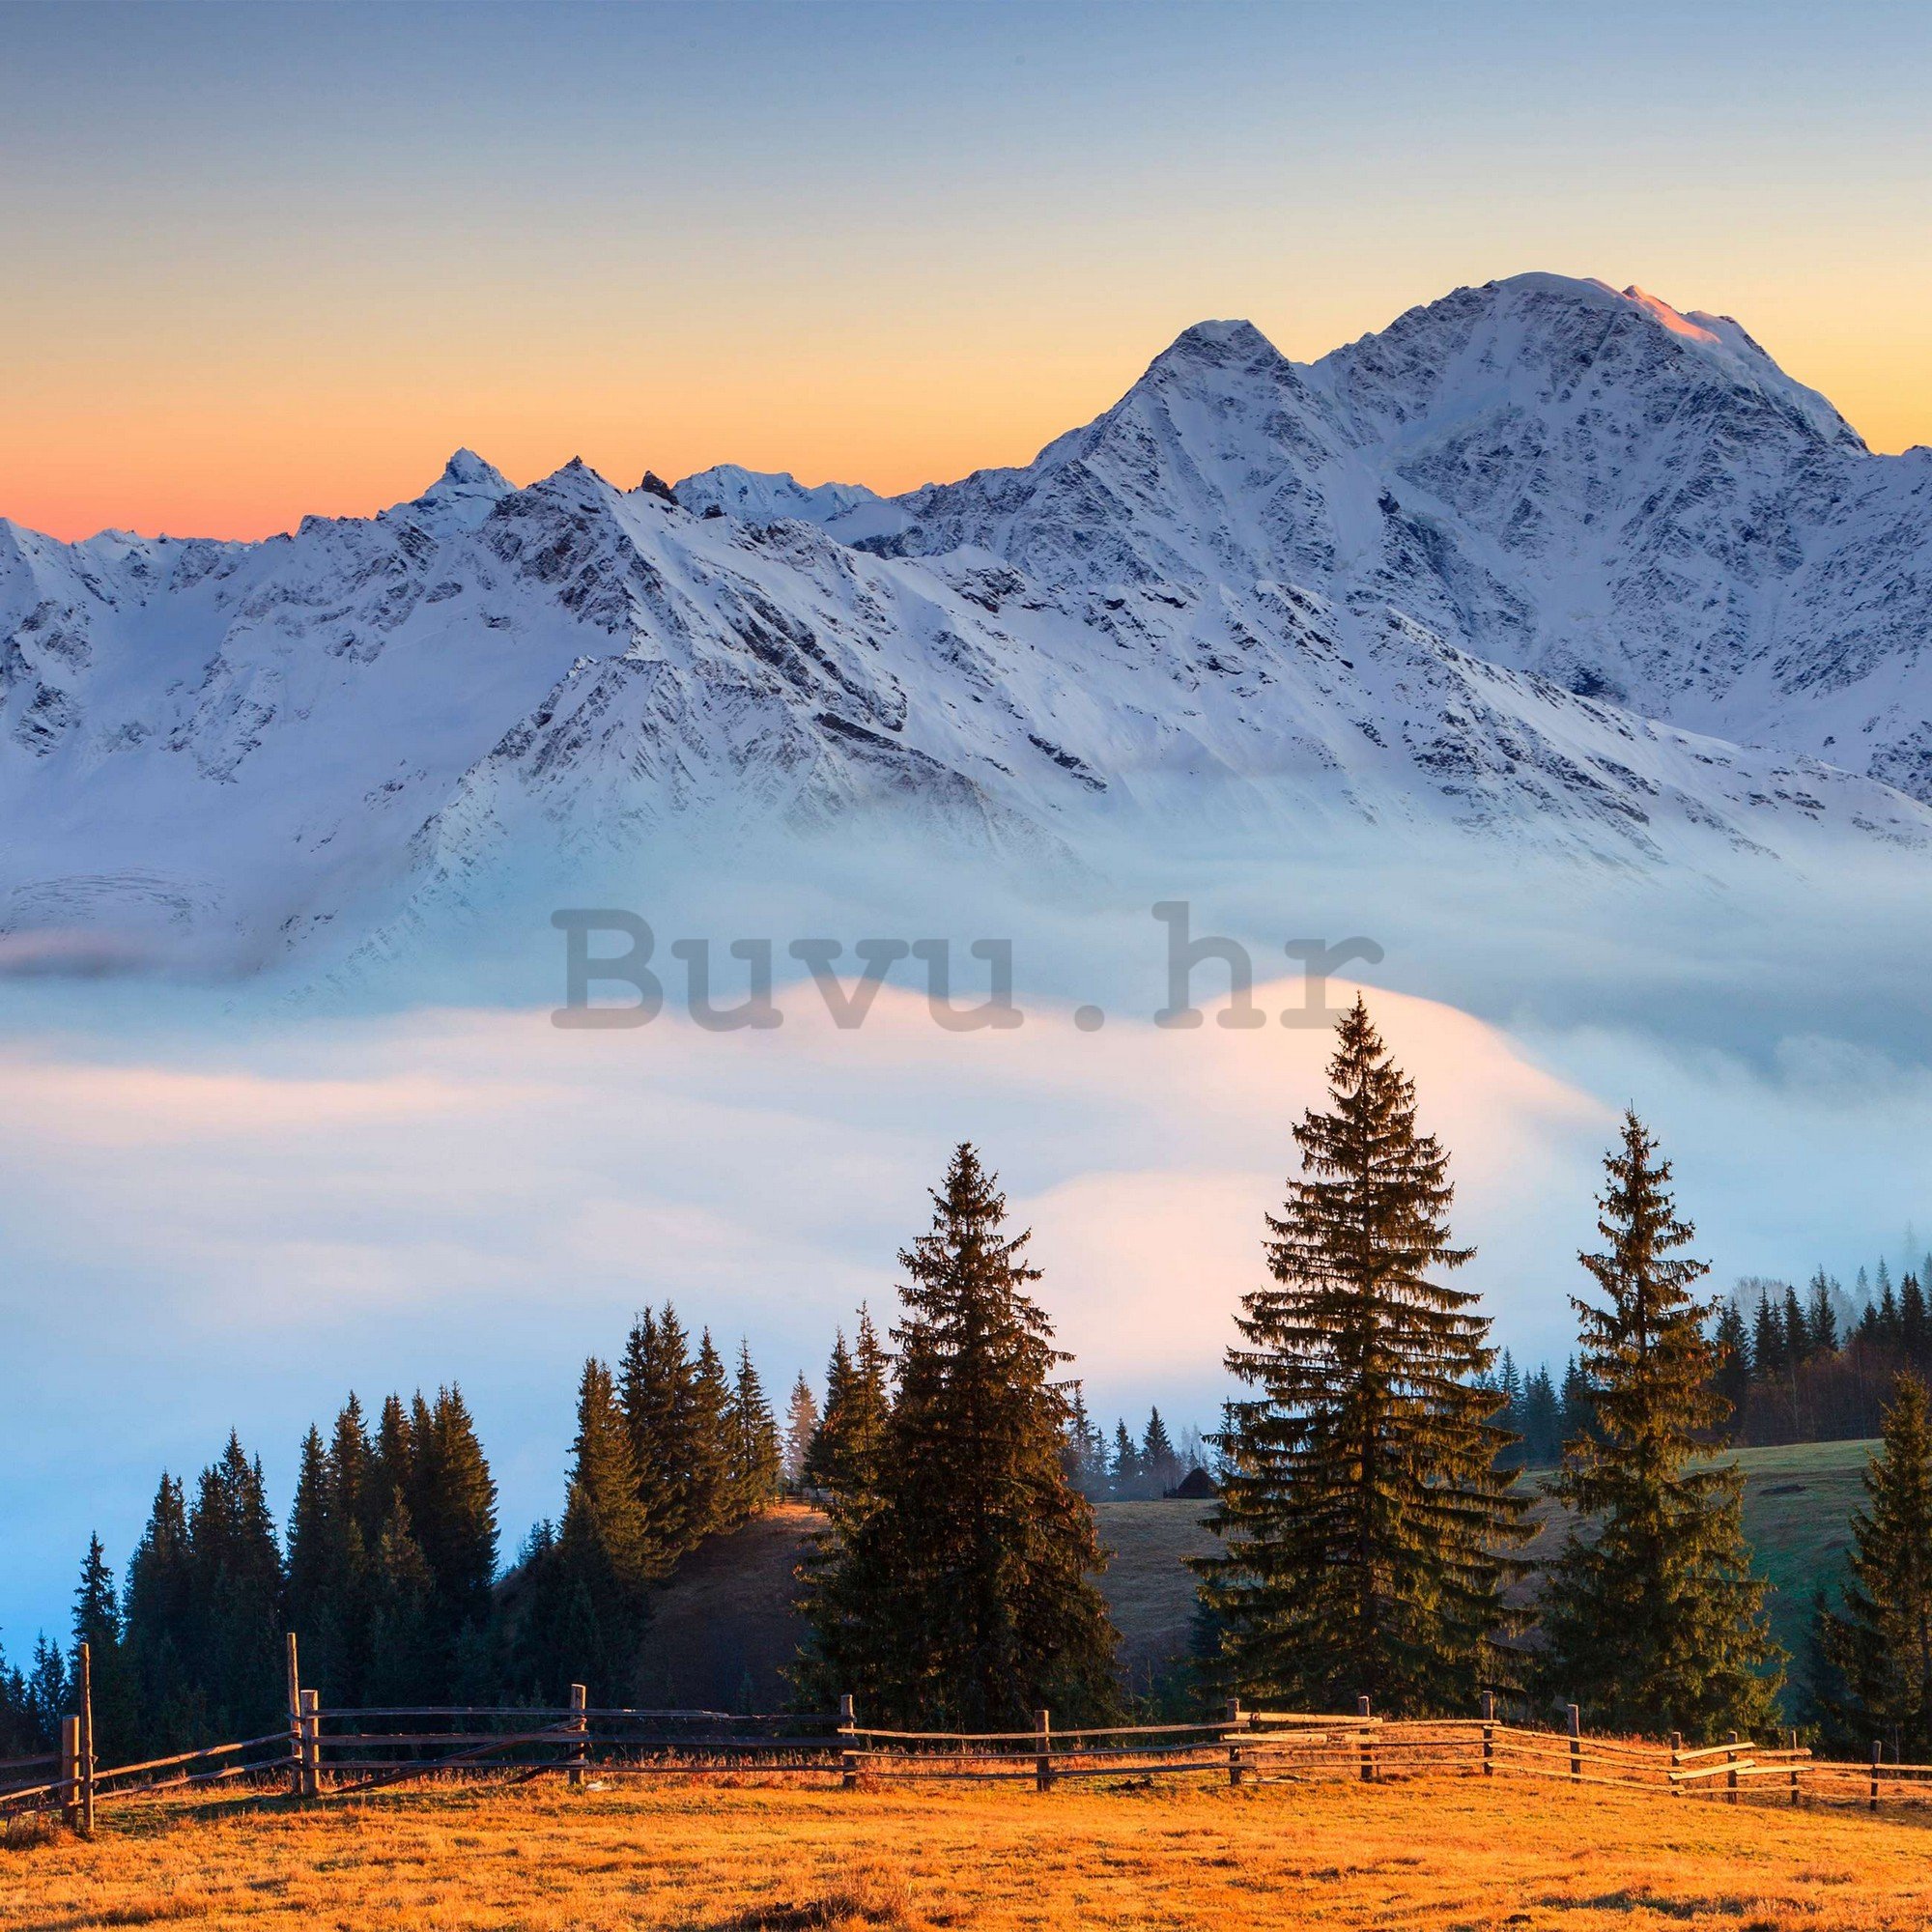 Vlies foto tapeta: Snježni planinski vrhovi - 368x254 cm